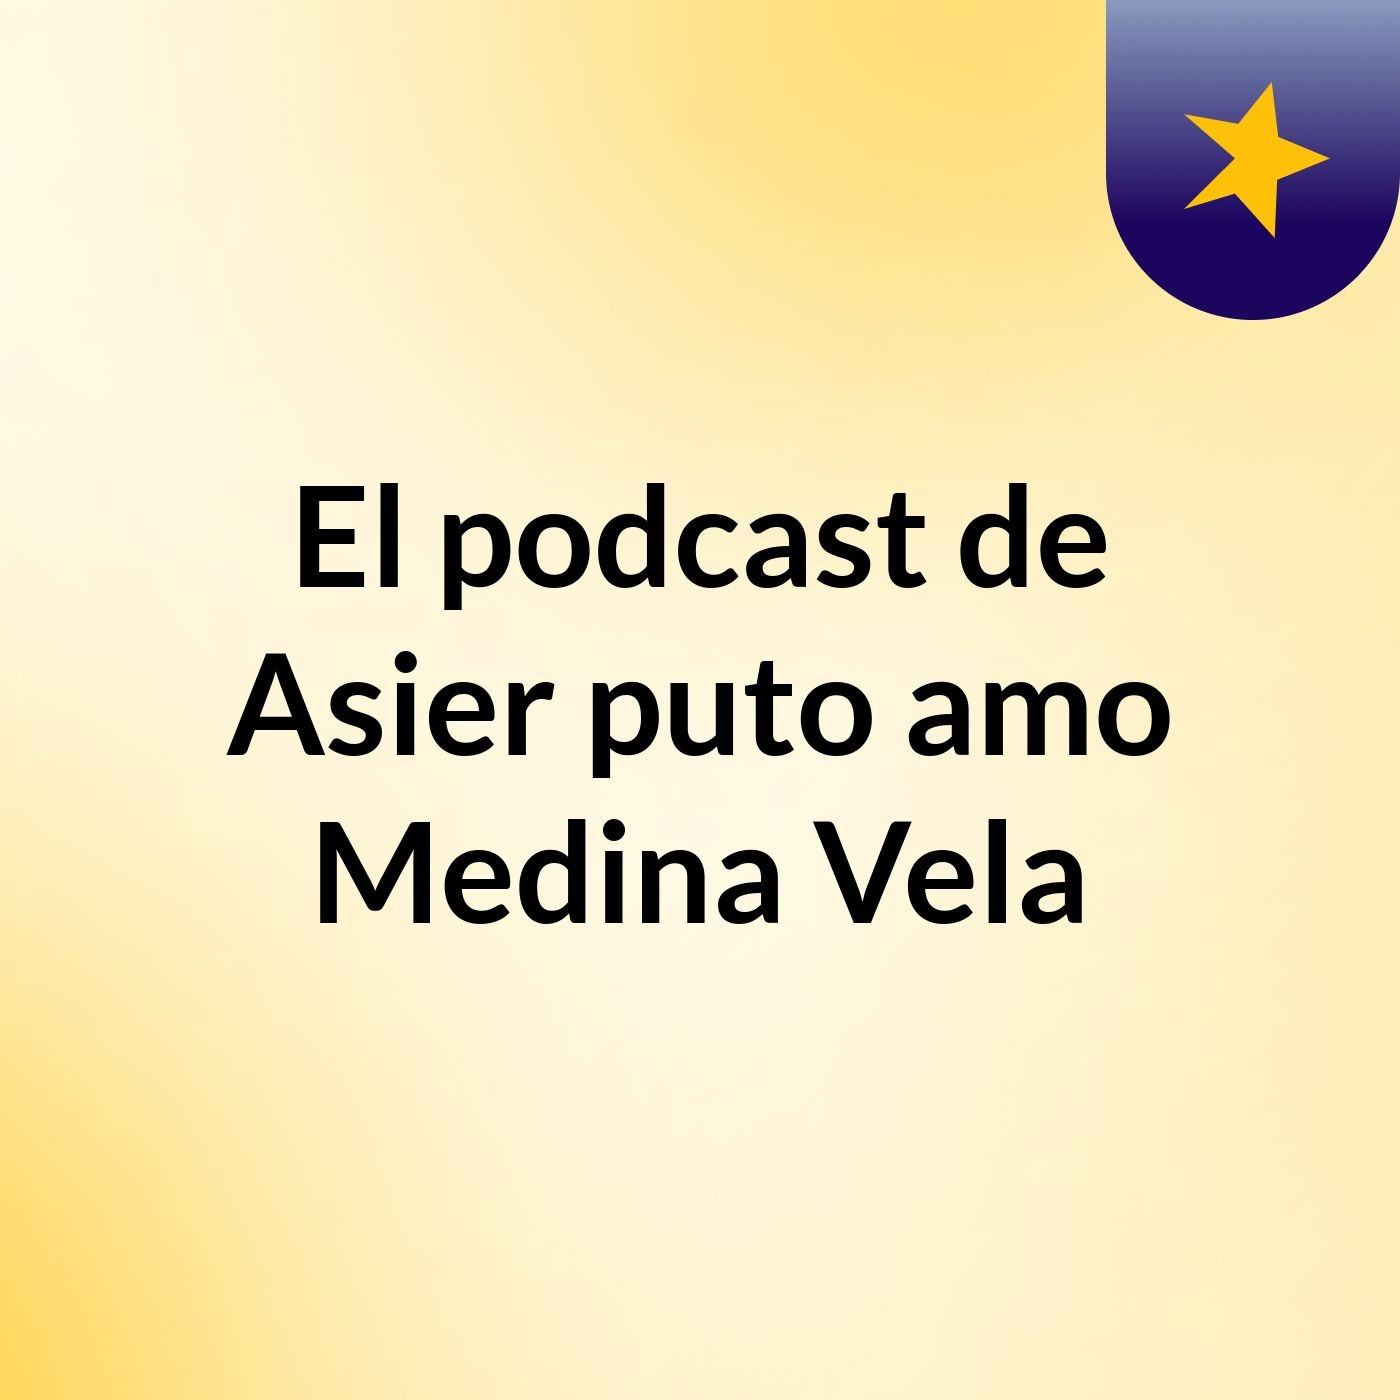 Episodio 4 - El podcast de Asier puto amo Medina Vela